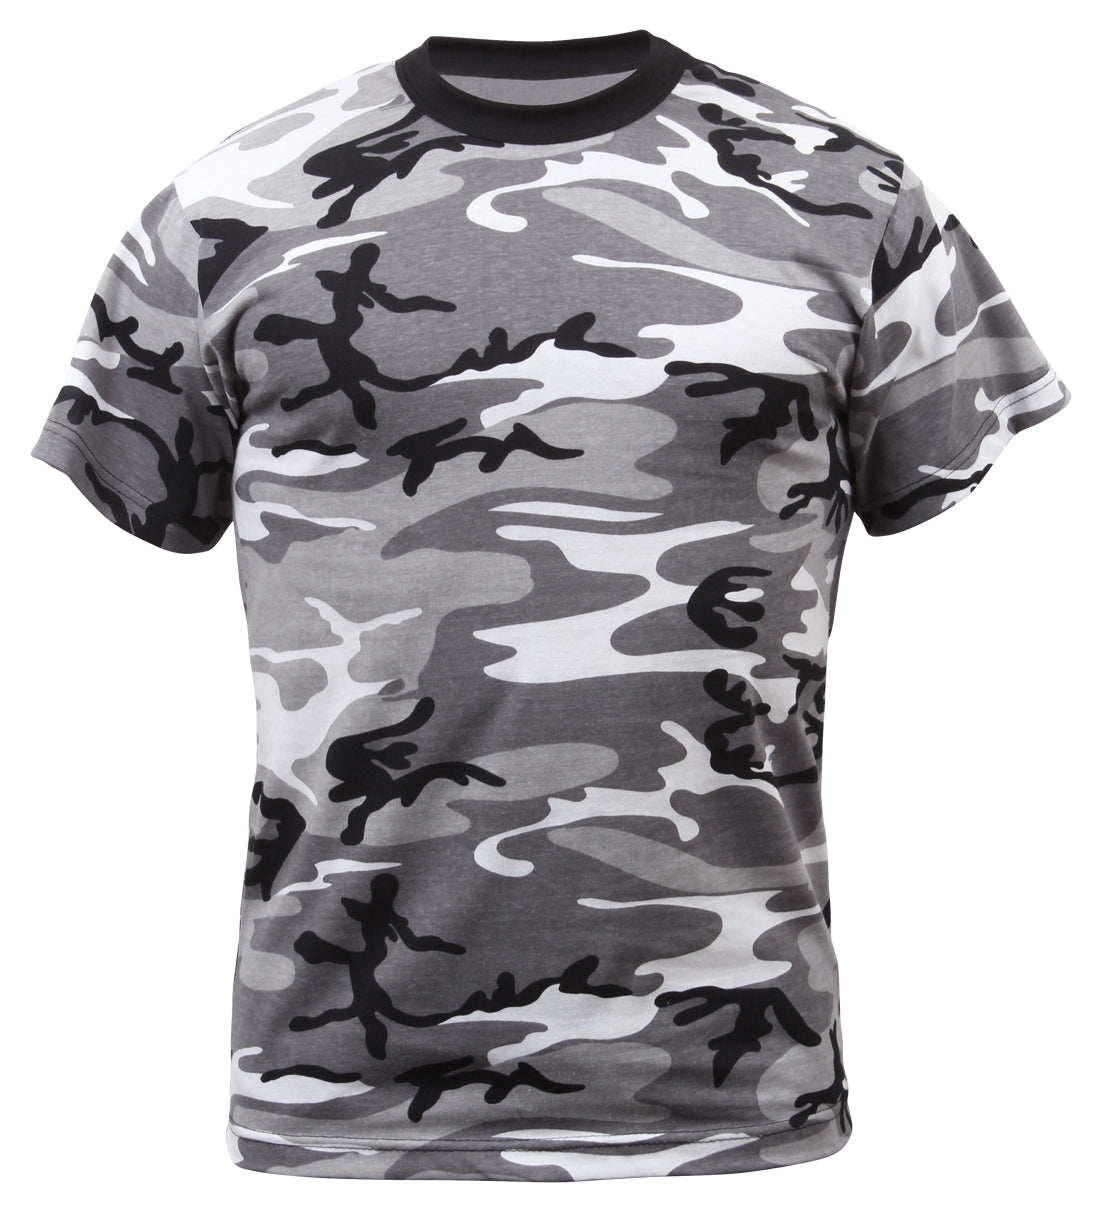 Milspec Color Camo T-Shirts Camo T-Shirts MilTac Tactical Military Outdoor Gear Australia